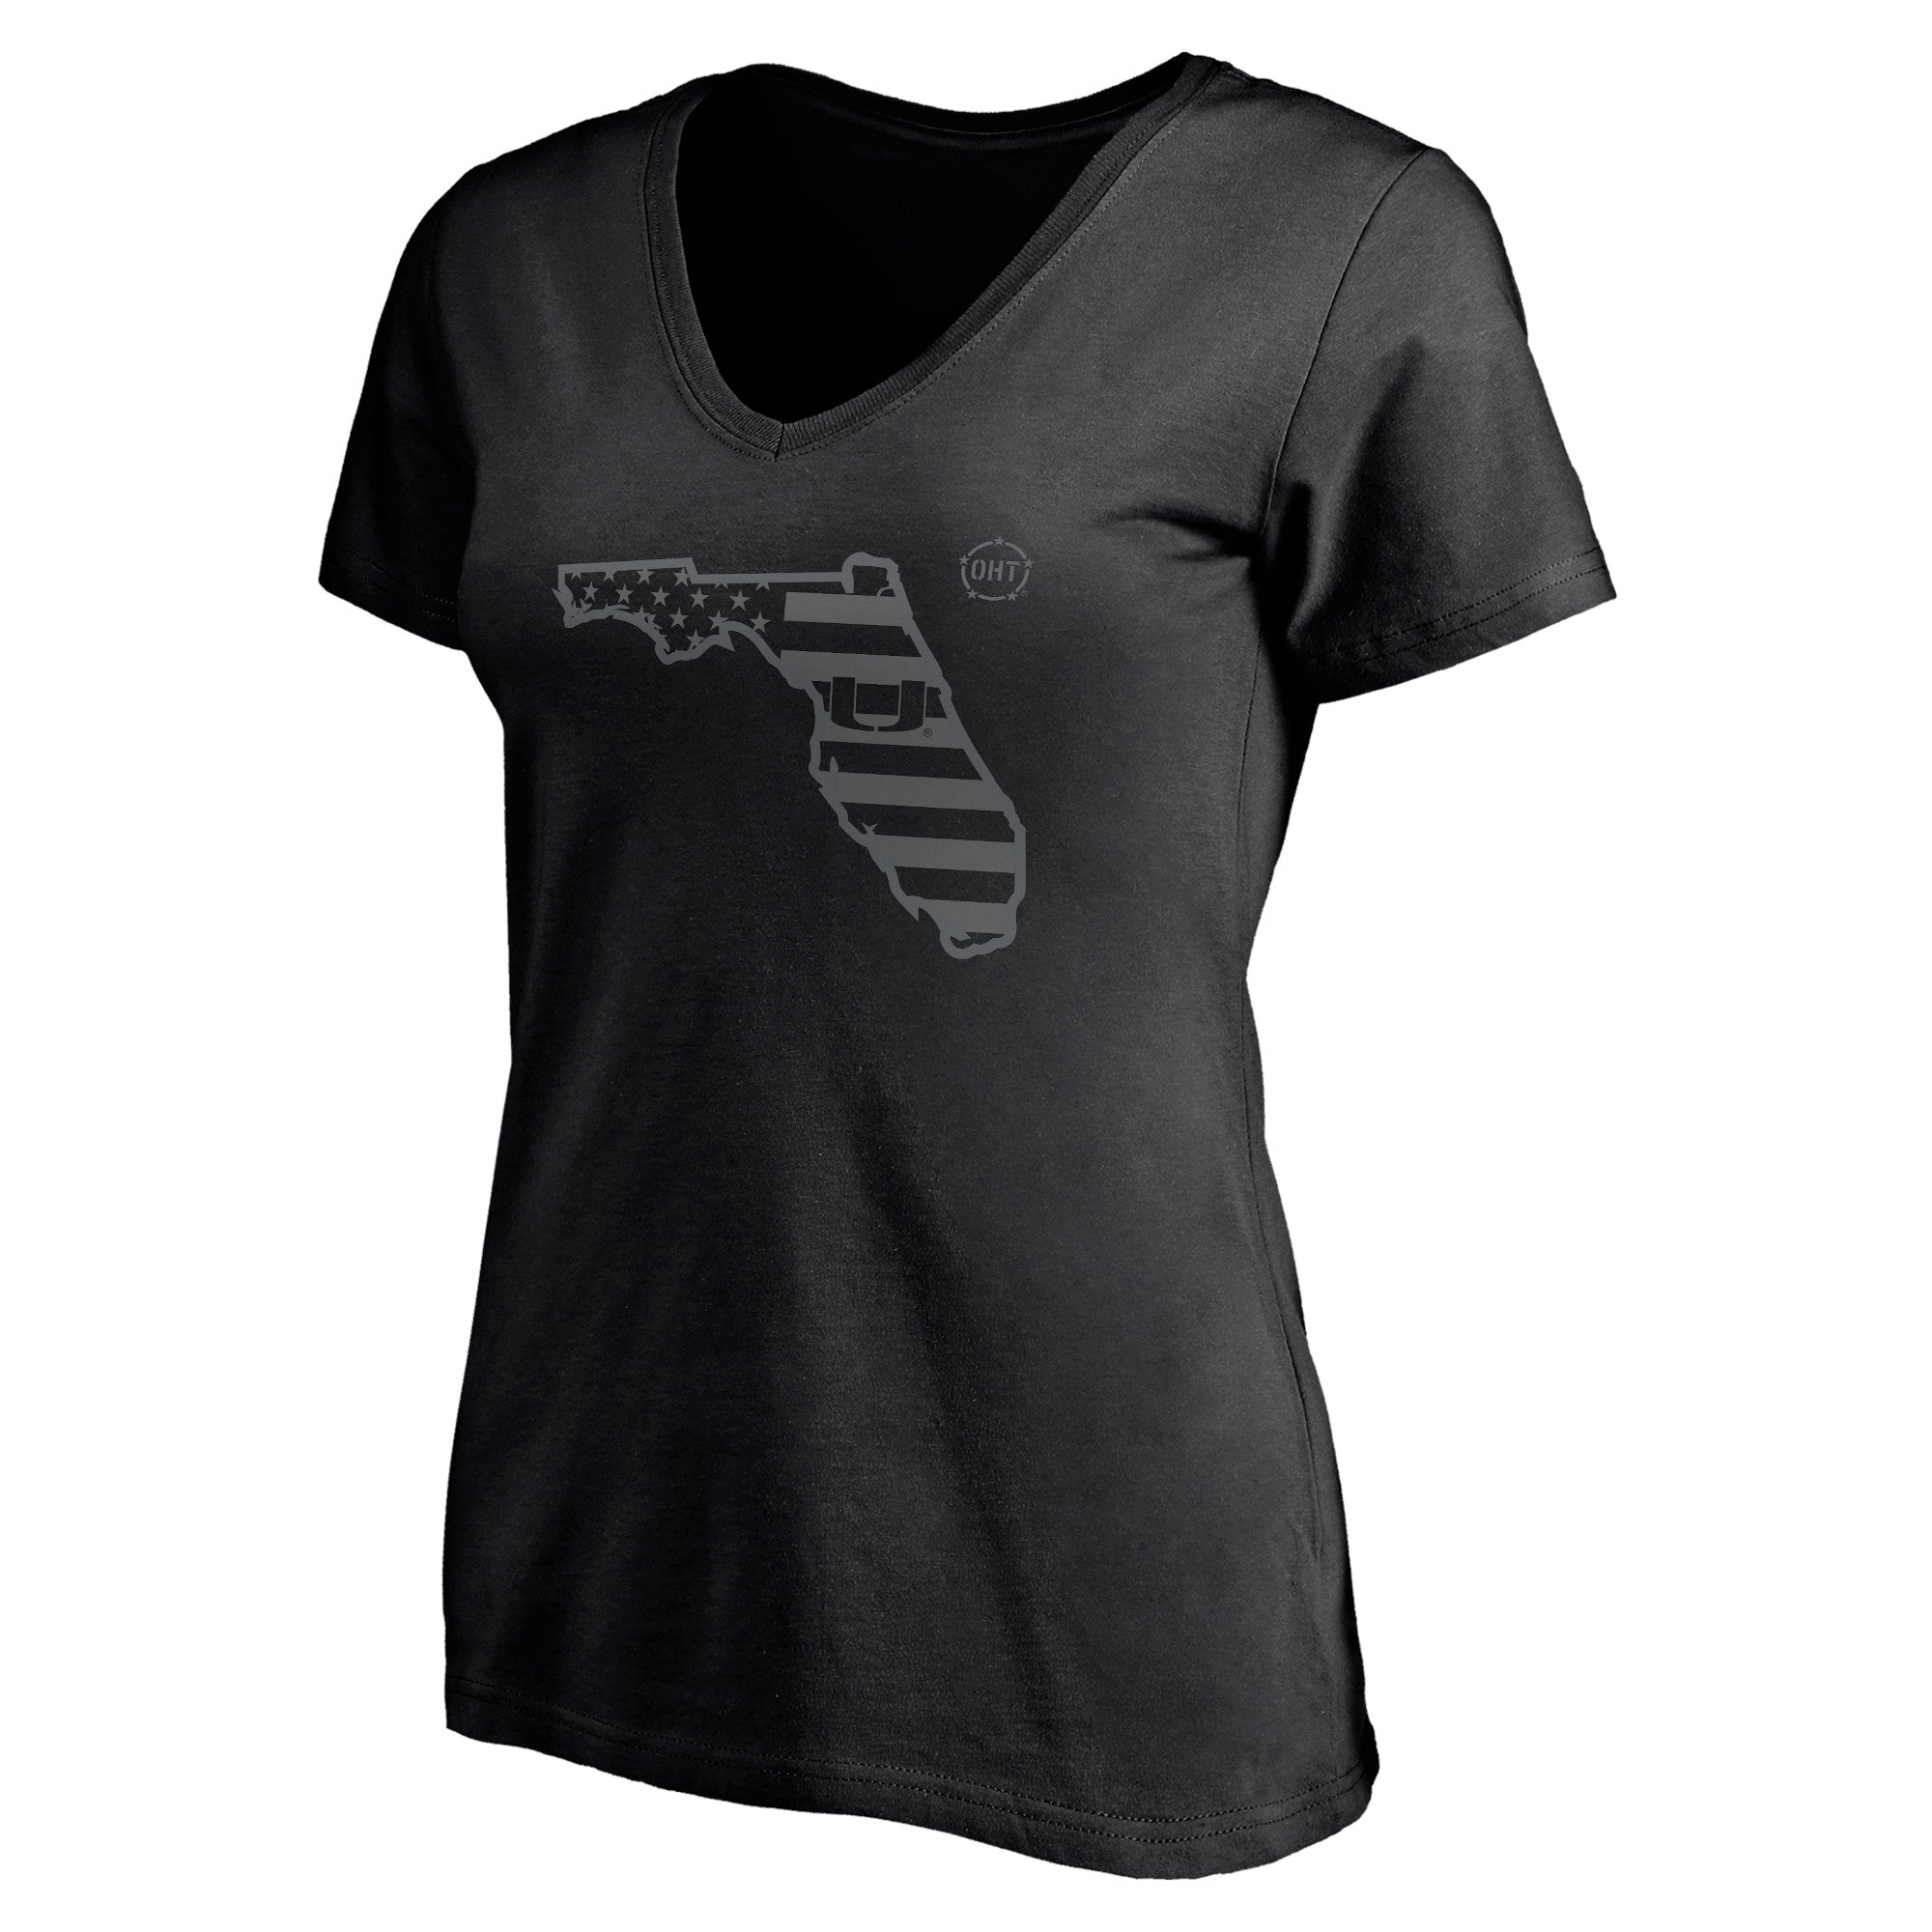 Miami Hurricanes Fanatics Women's OHT Midnight T-Shirt - Black